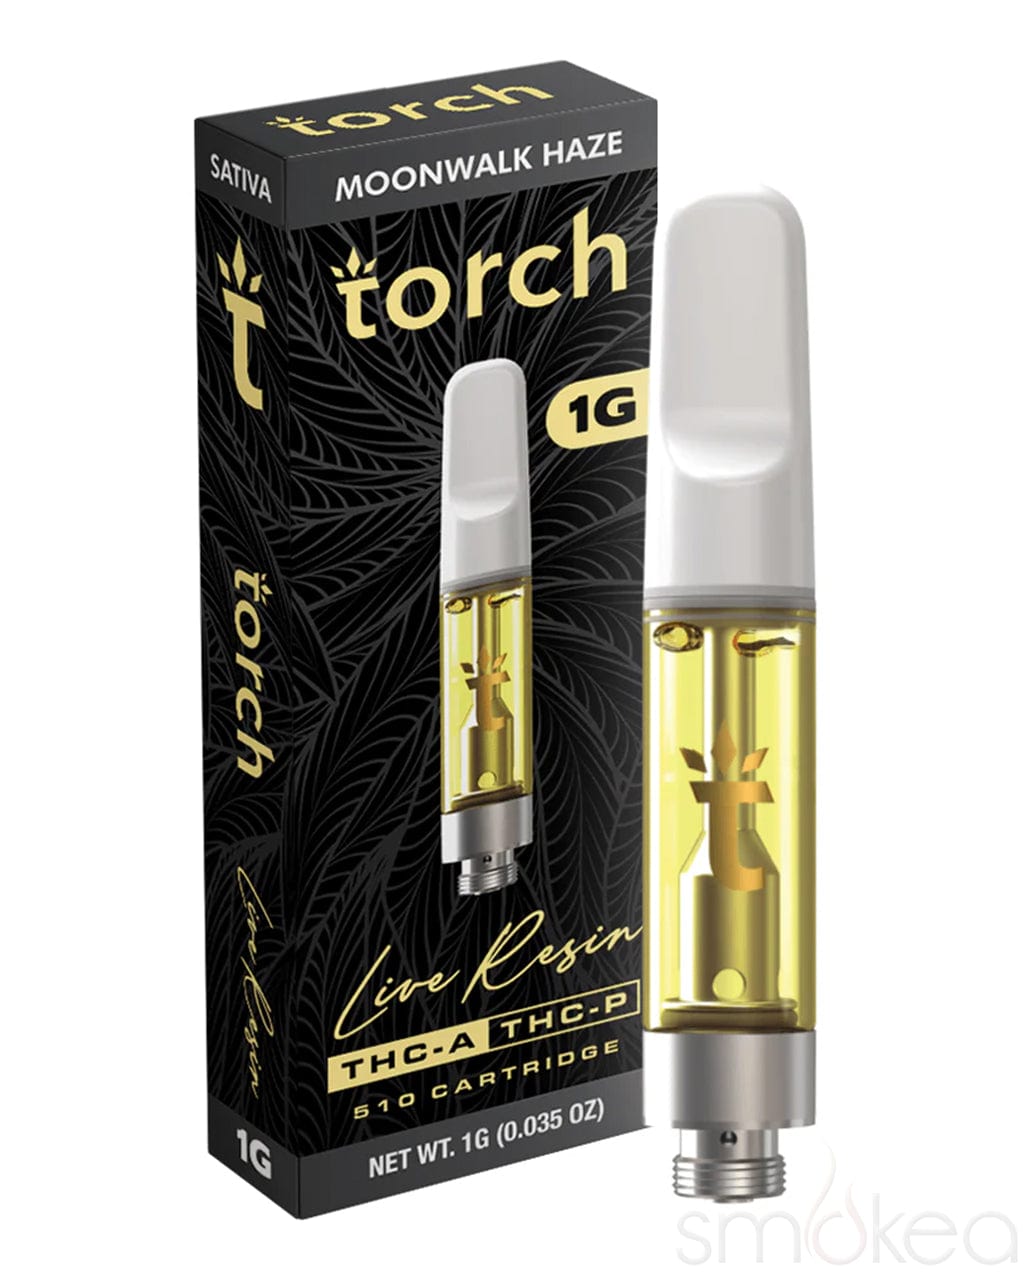 Torch 1g THCA Live Resin Blend Cartridge - Moonwalk Haze